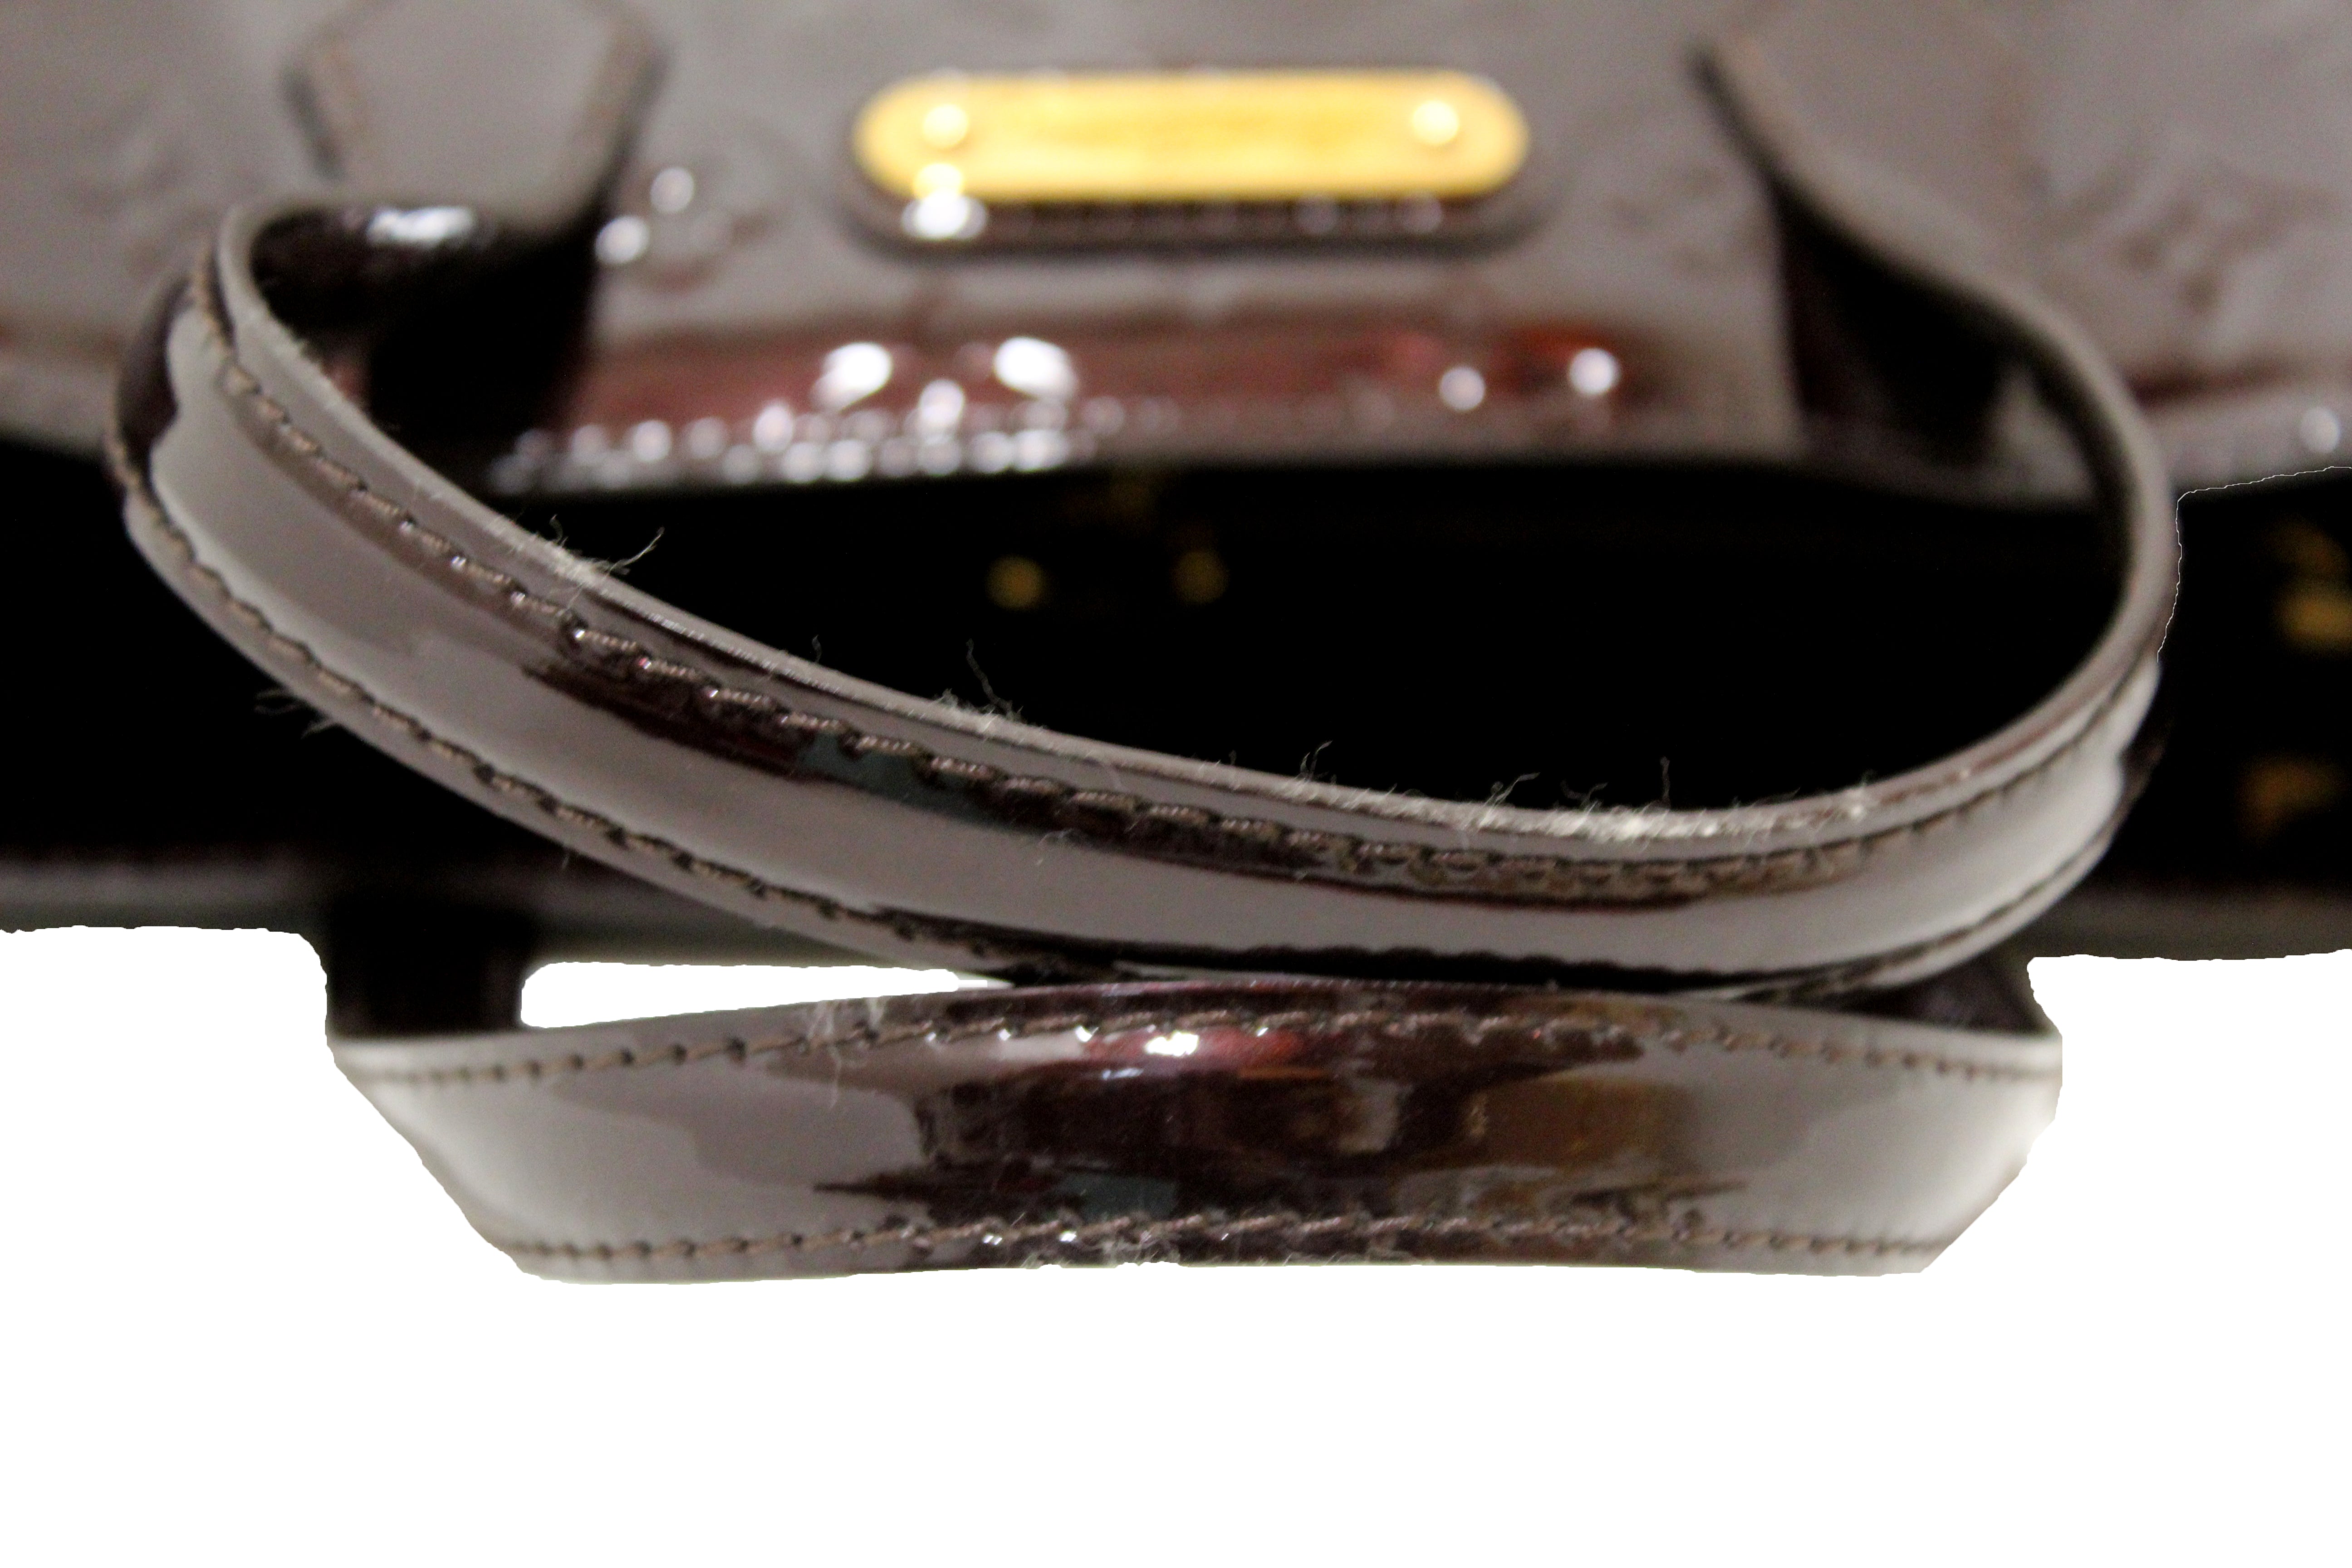 Authentic Louis Vuitton Amarante Monogram Vernis Leather Wilshire PM Handbag